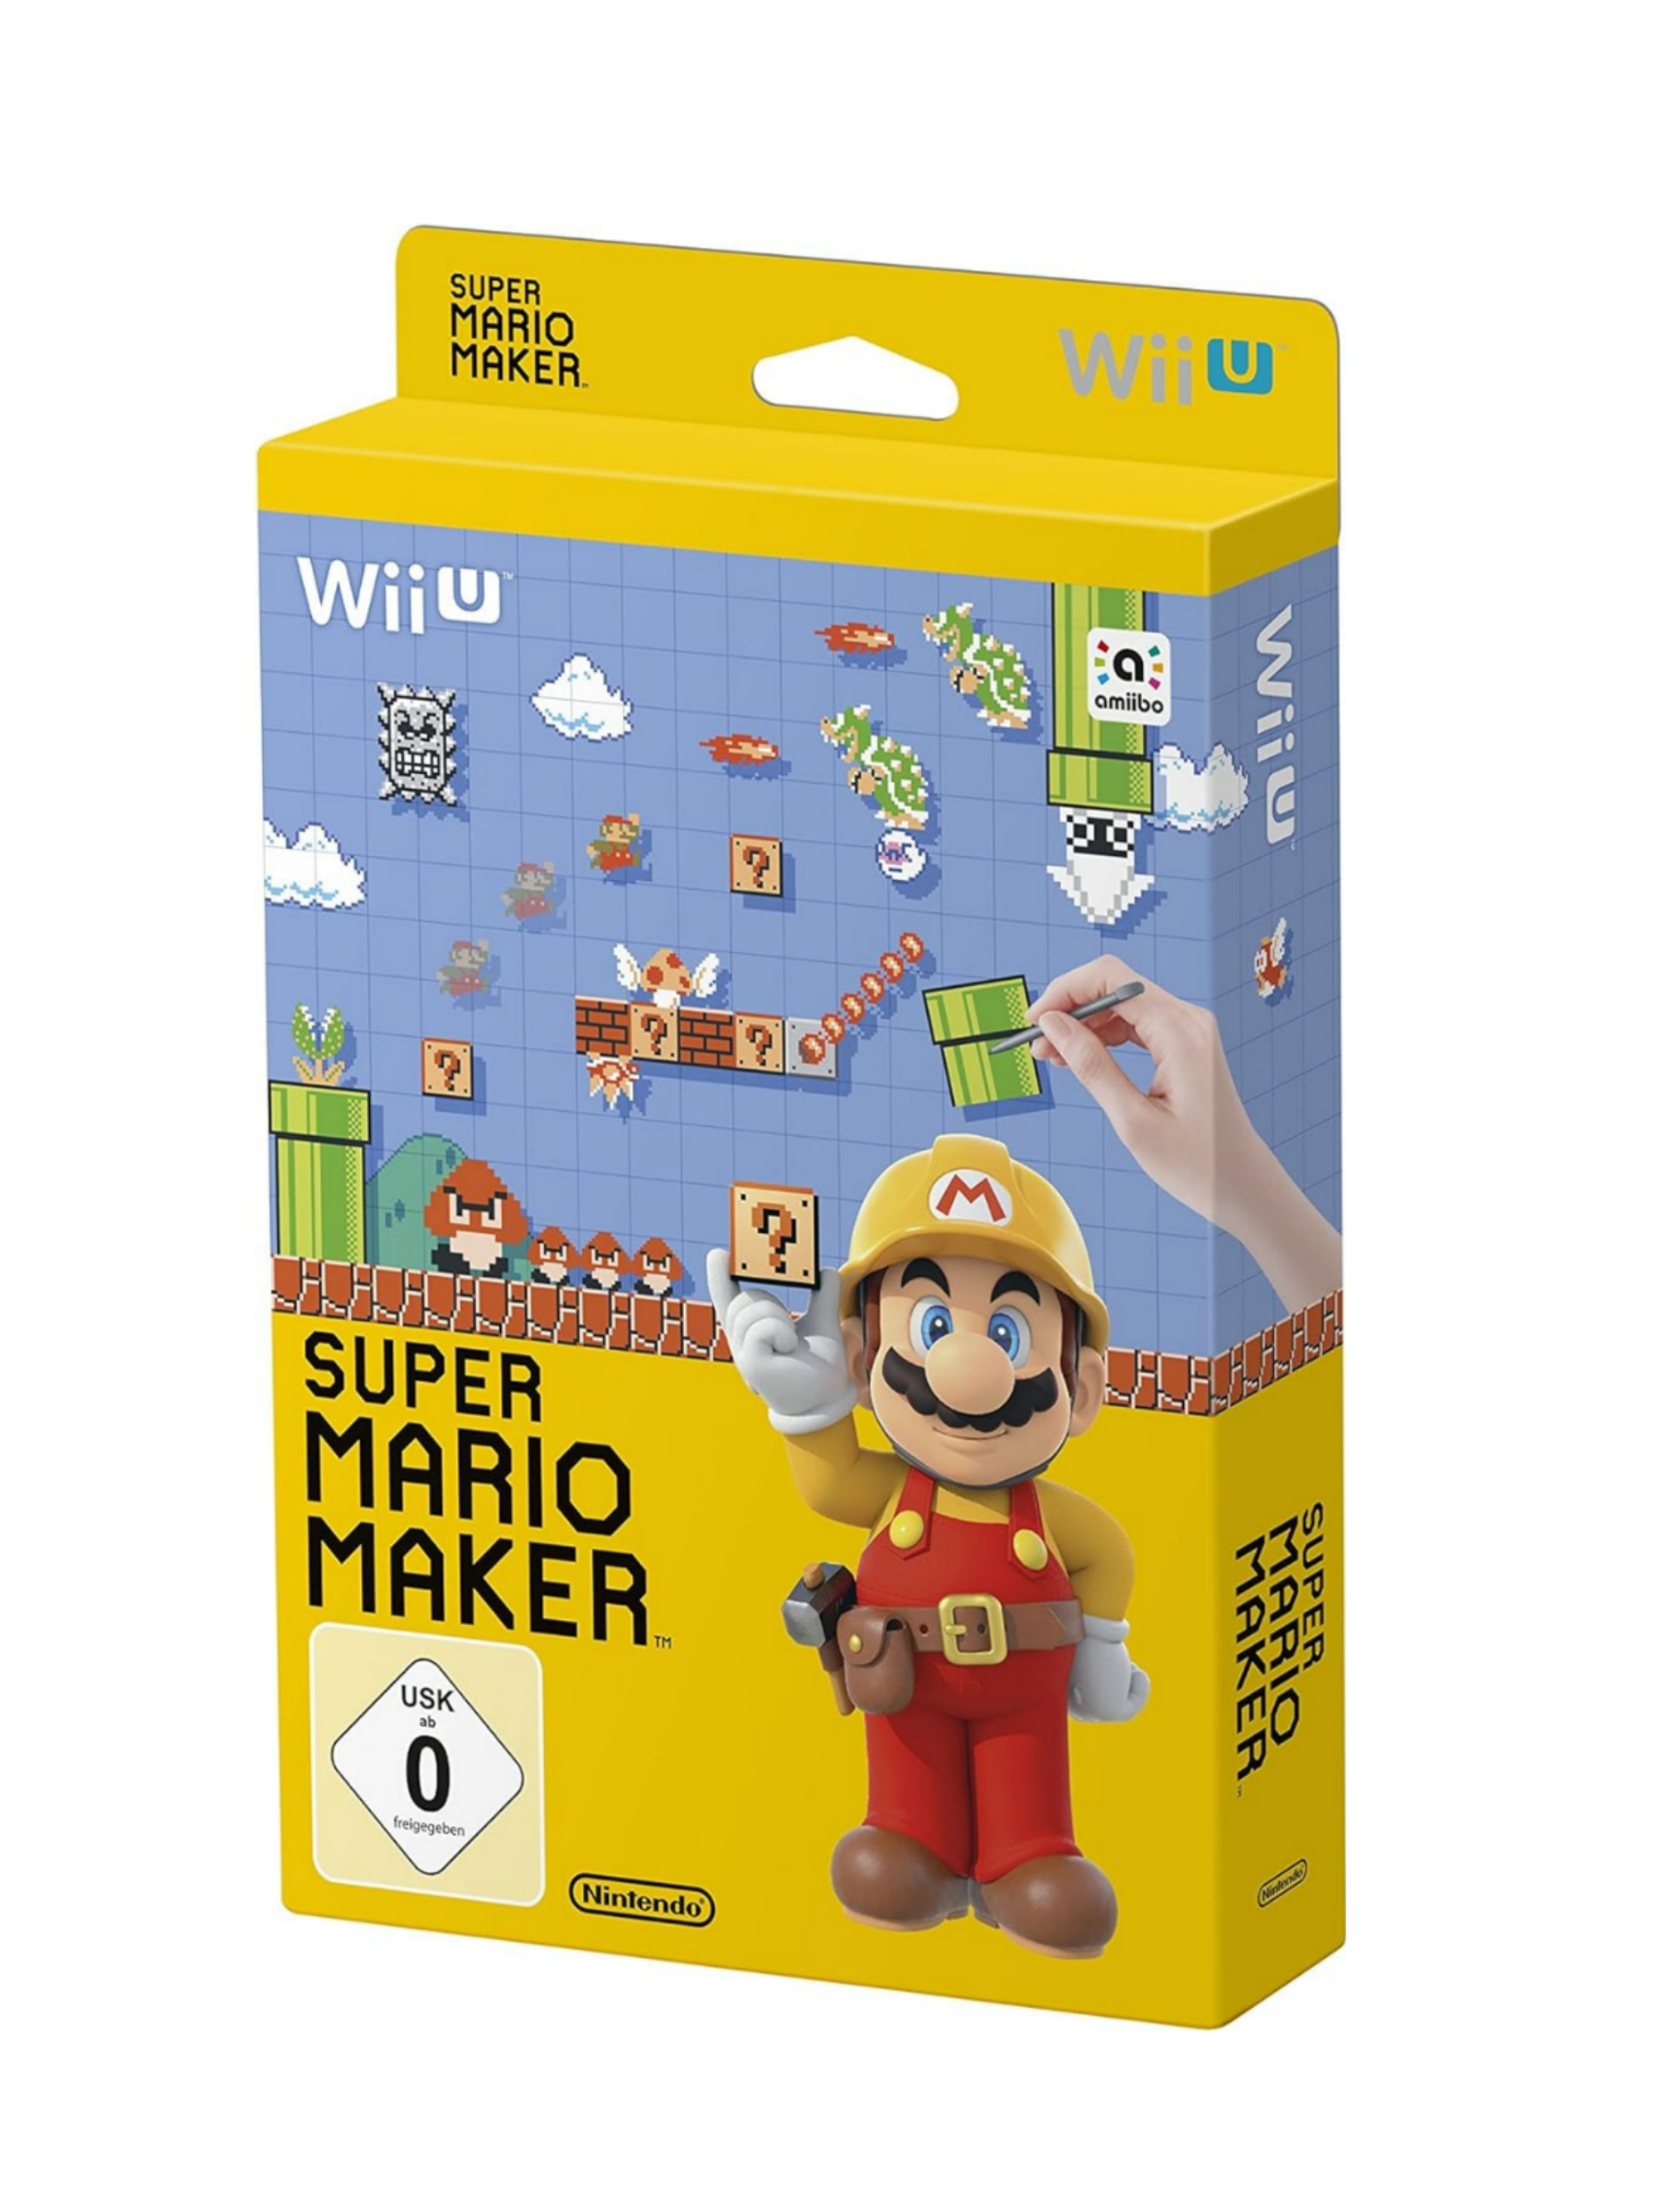 Super Mario Maker - Artbook Edition - Wii U